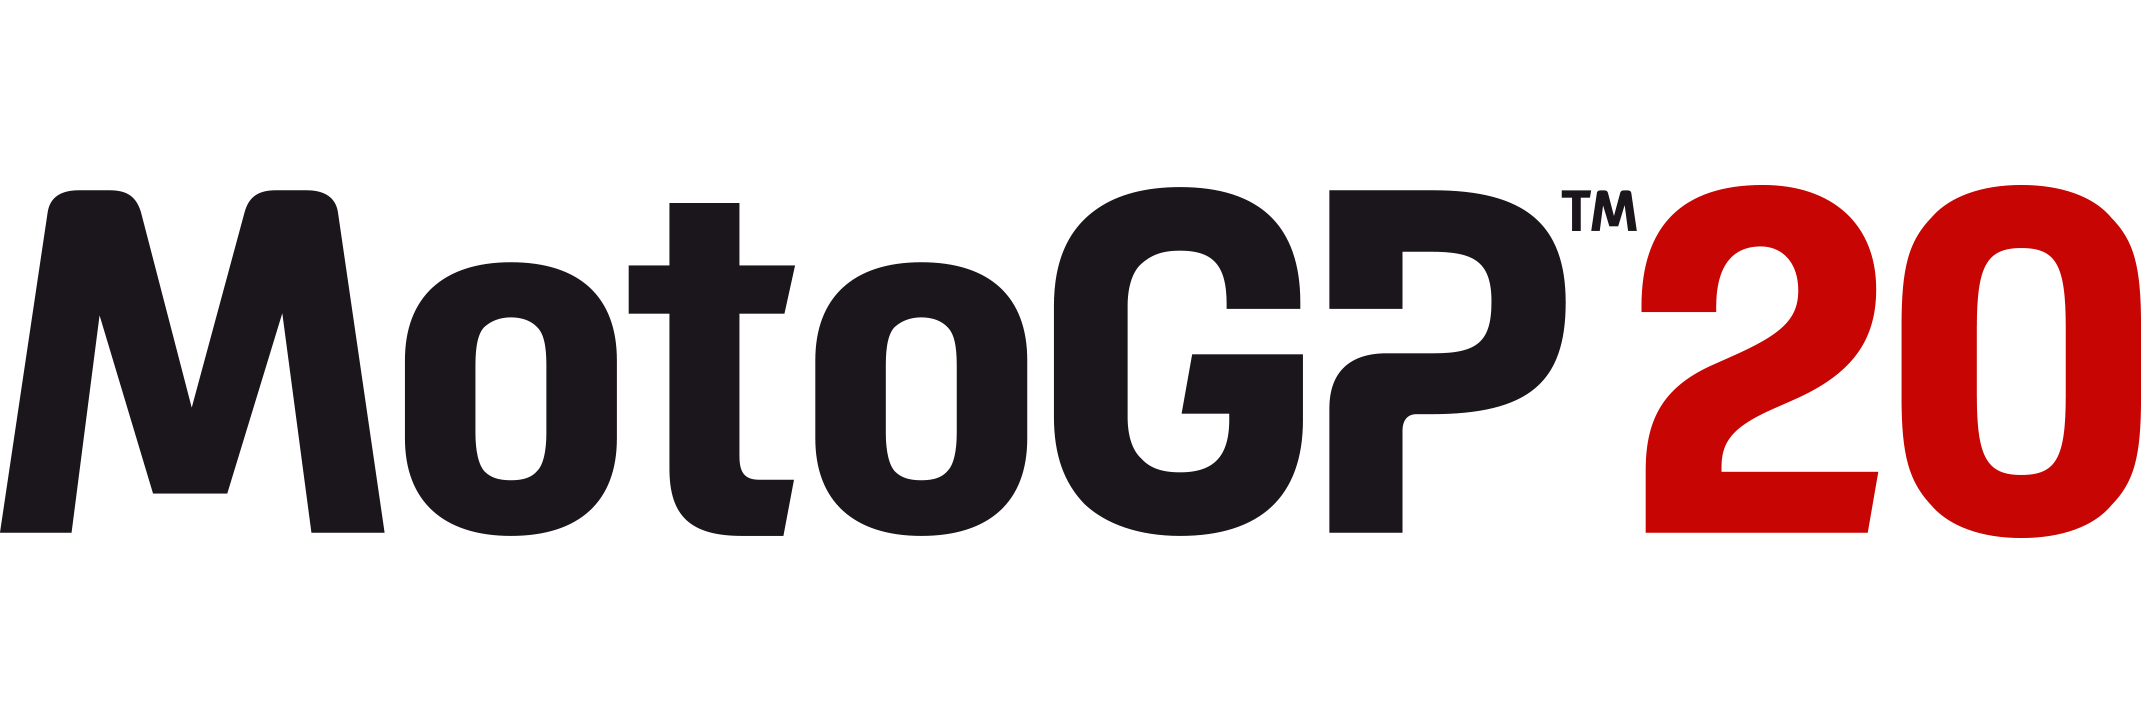 Moto Gp Logo Png And Vector Logo Download - vrogue.co